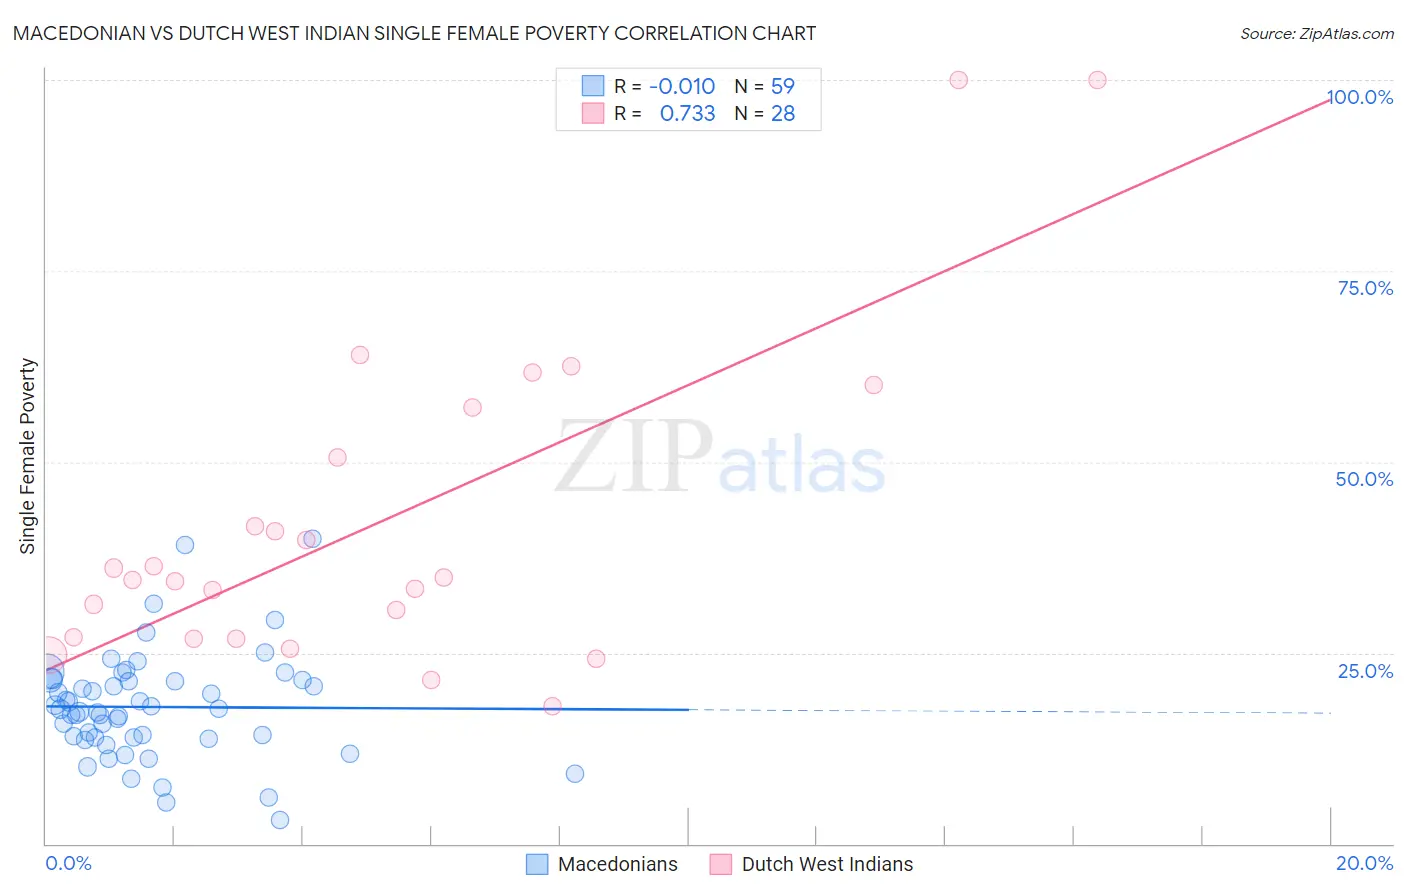 Macedonian vs Dutch West Indian Single Female Poverty